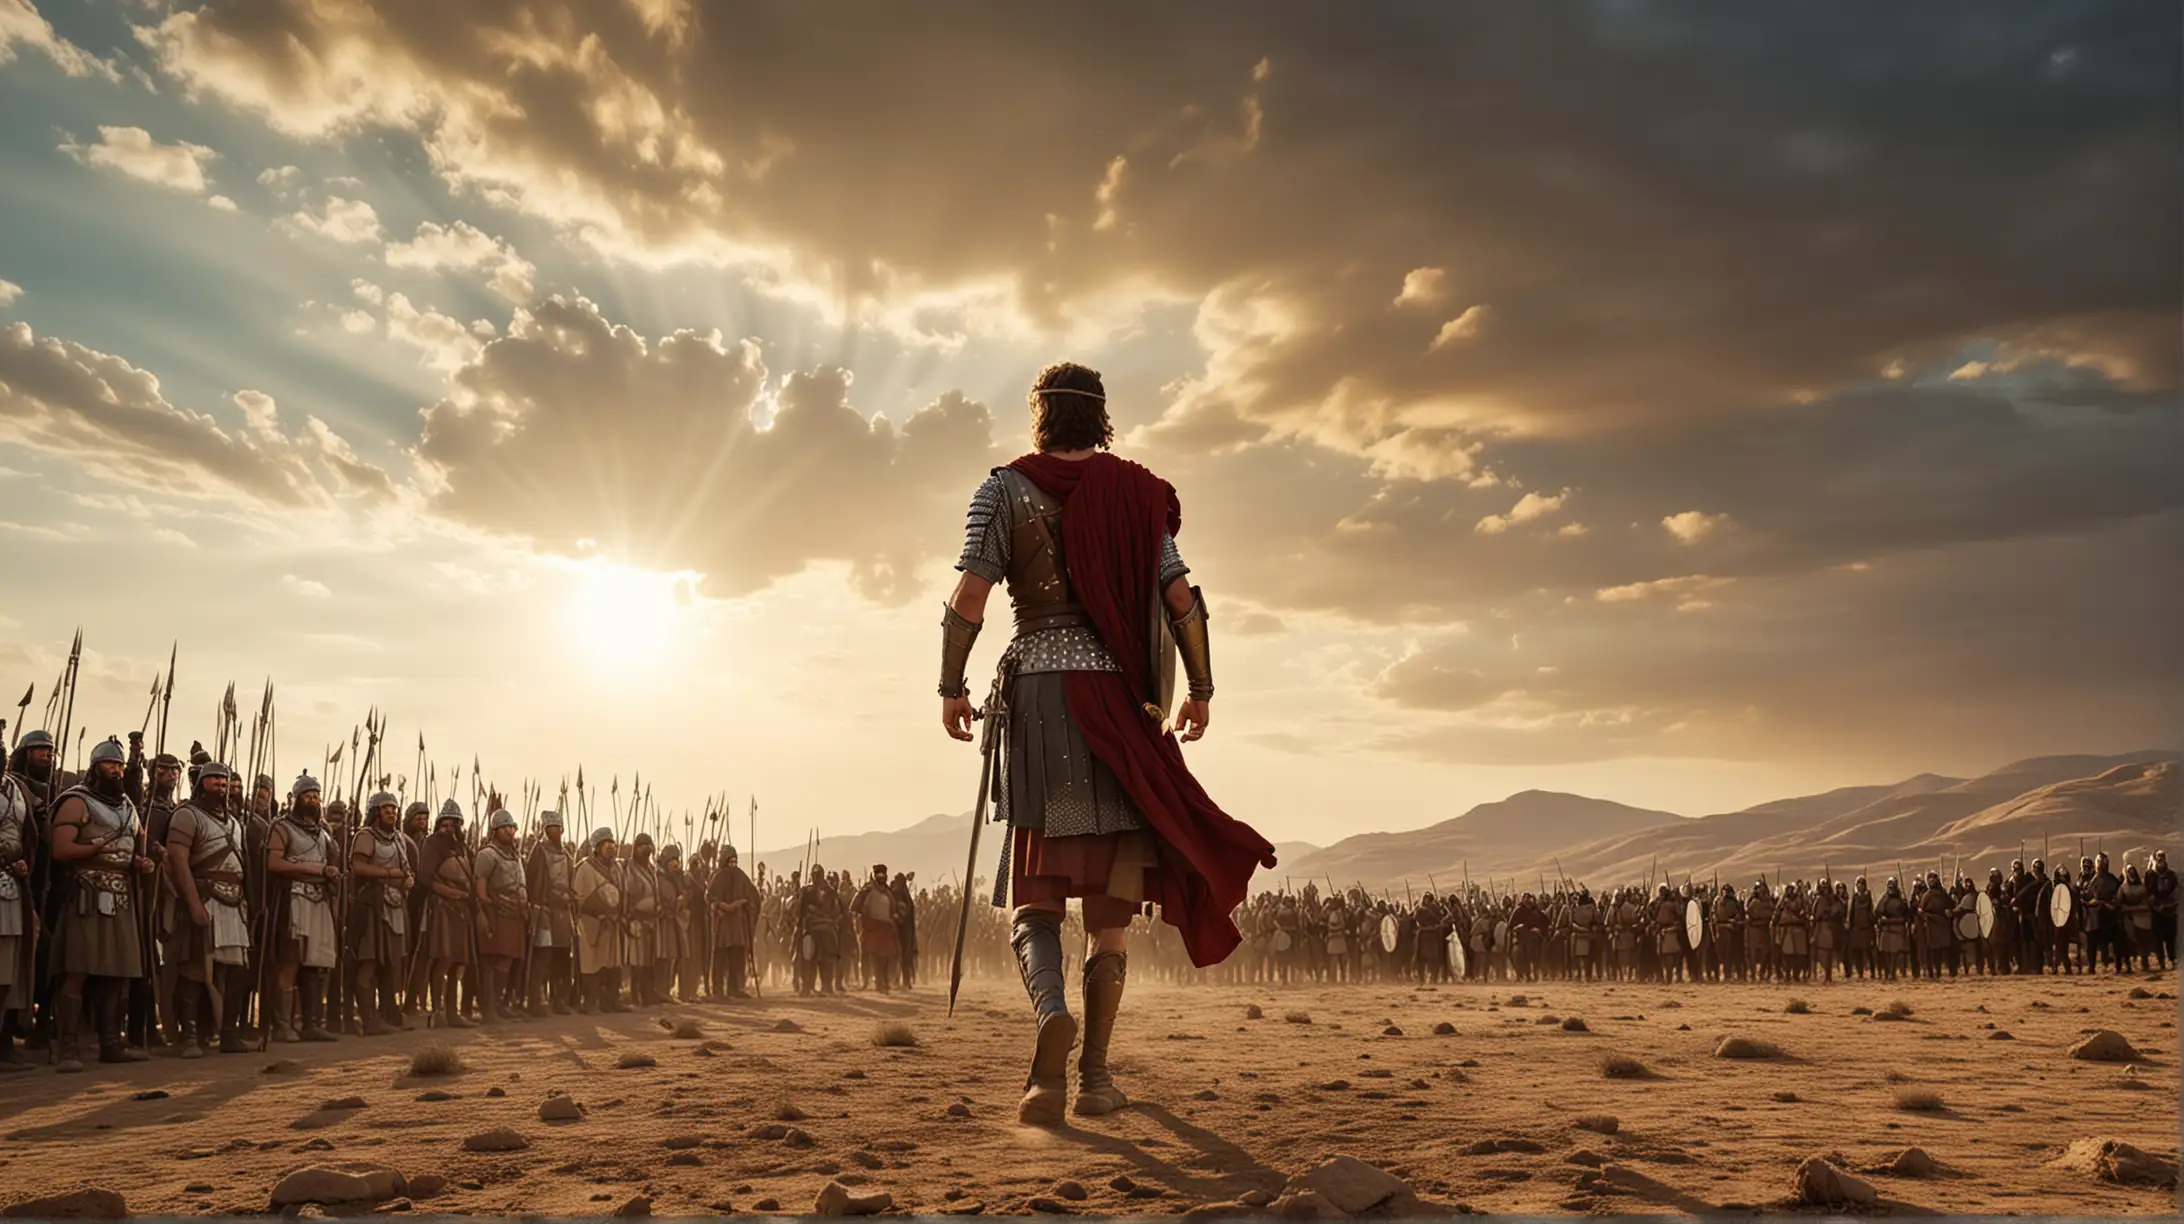 Epic Battle King David Confronts Warriors on Desert Hilly Fields